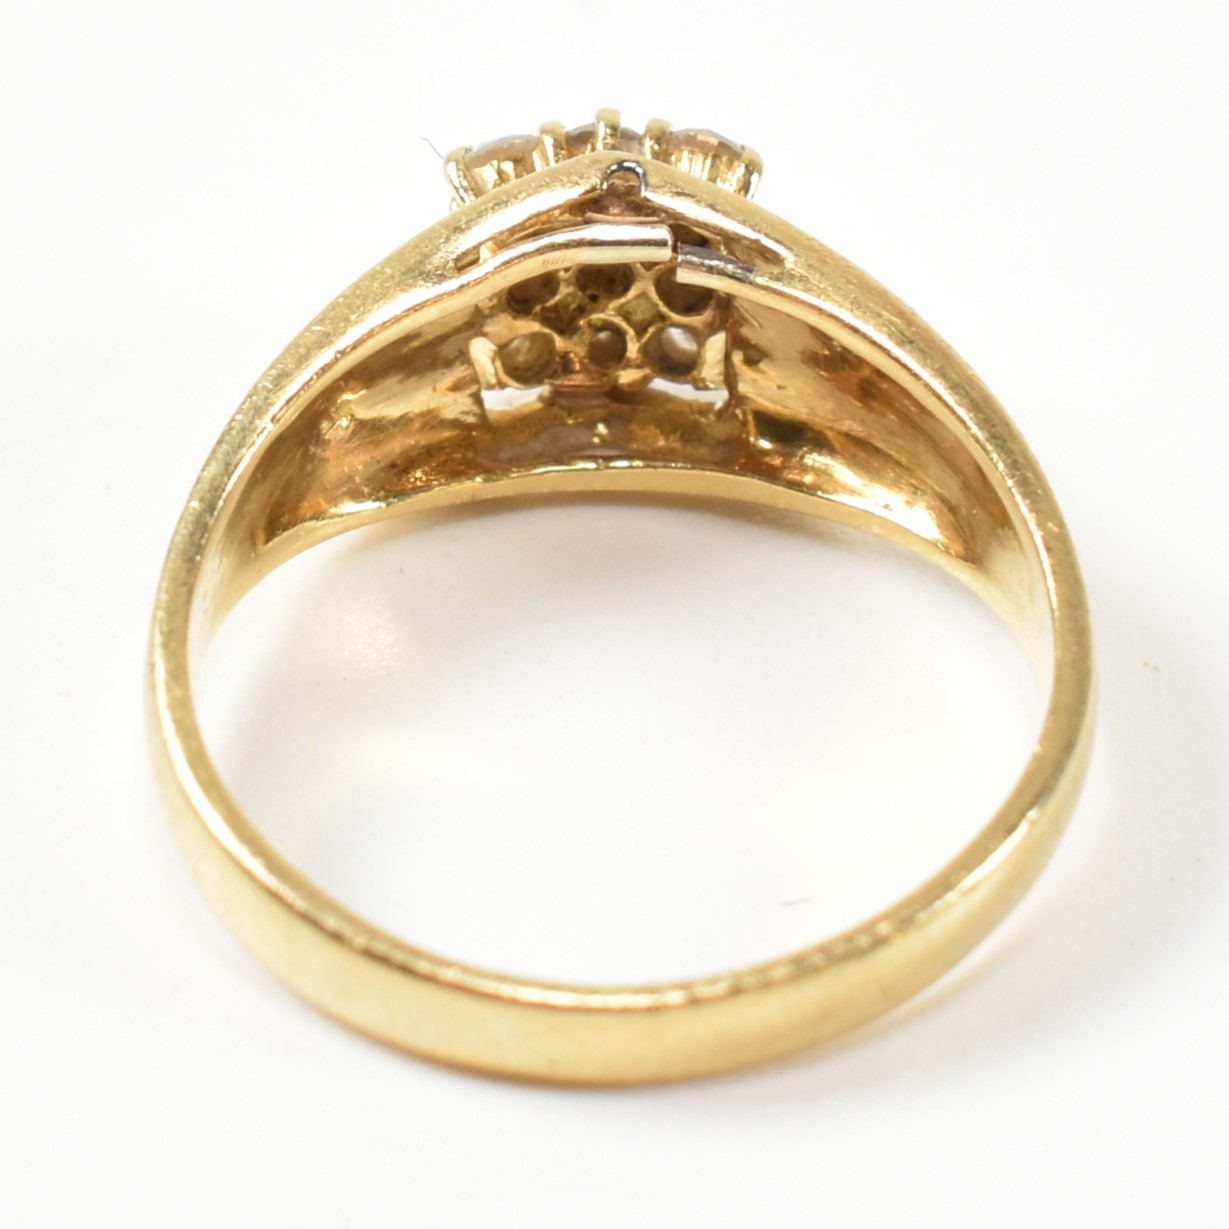 HALLMARKED 18CT GOLD & DIAMOND SIGNET RING - Image 2 of 11